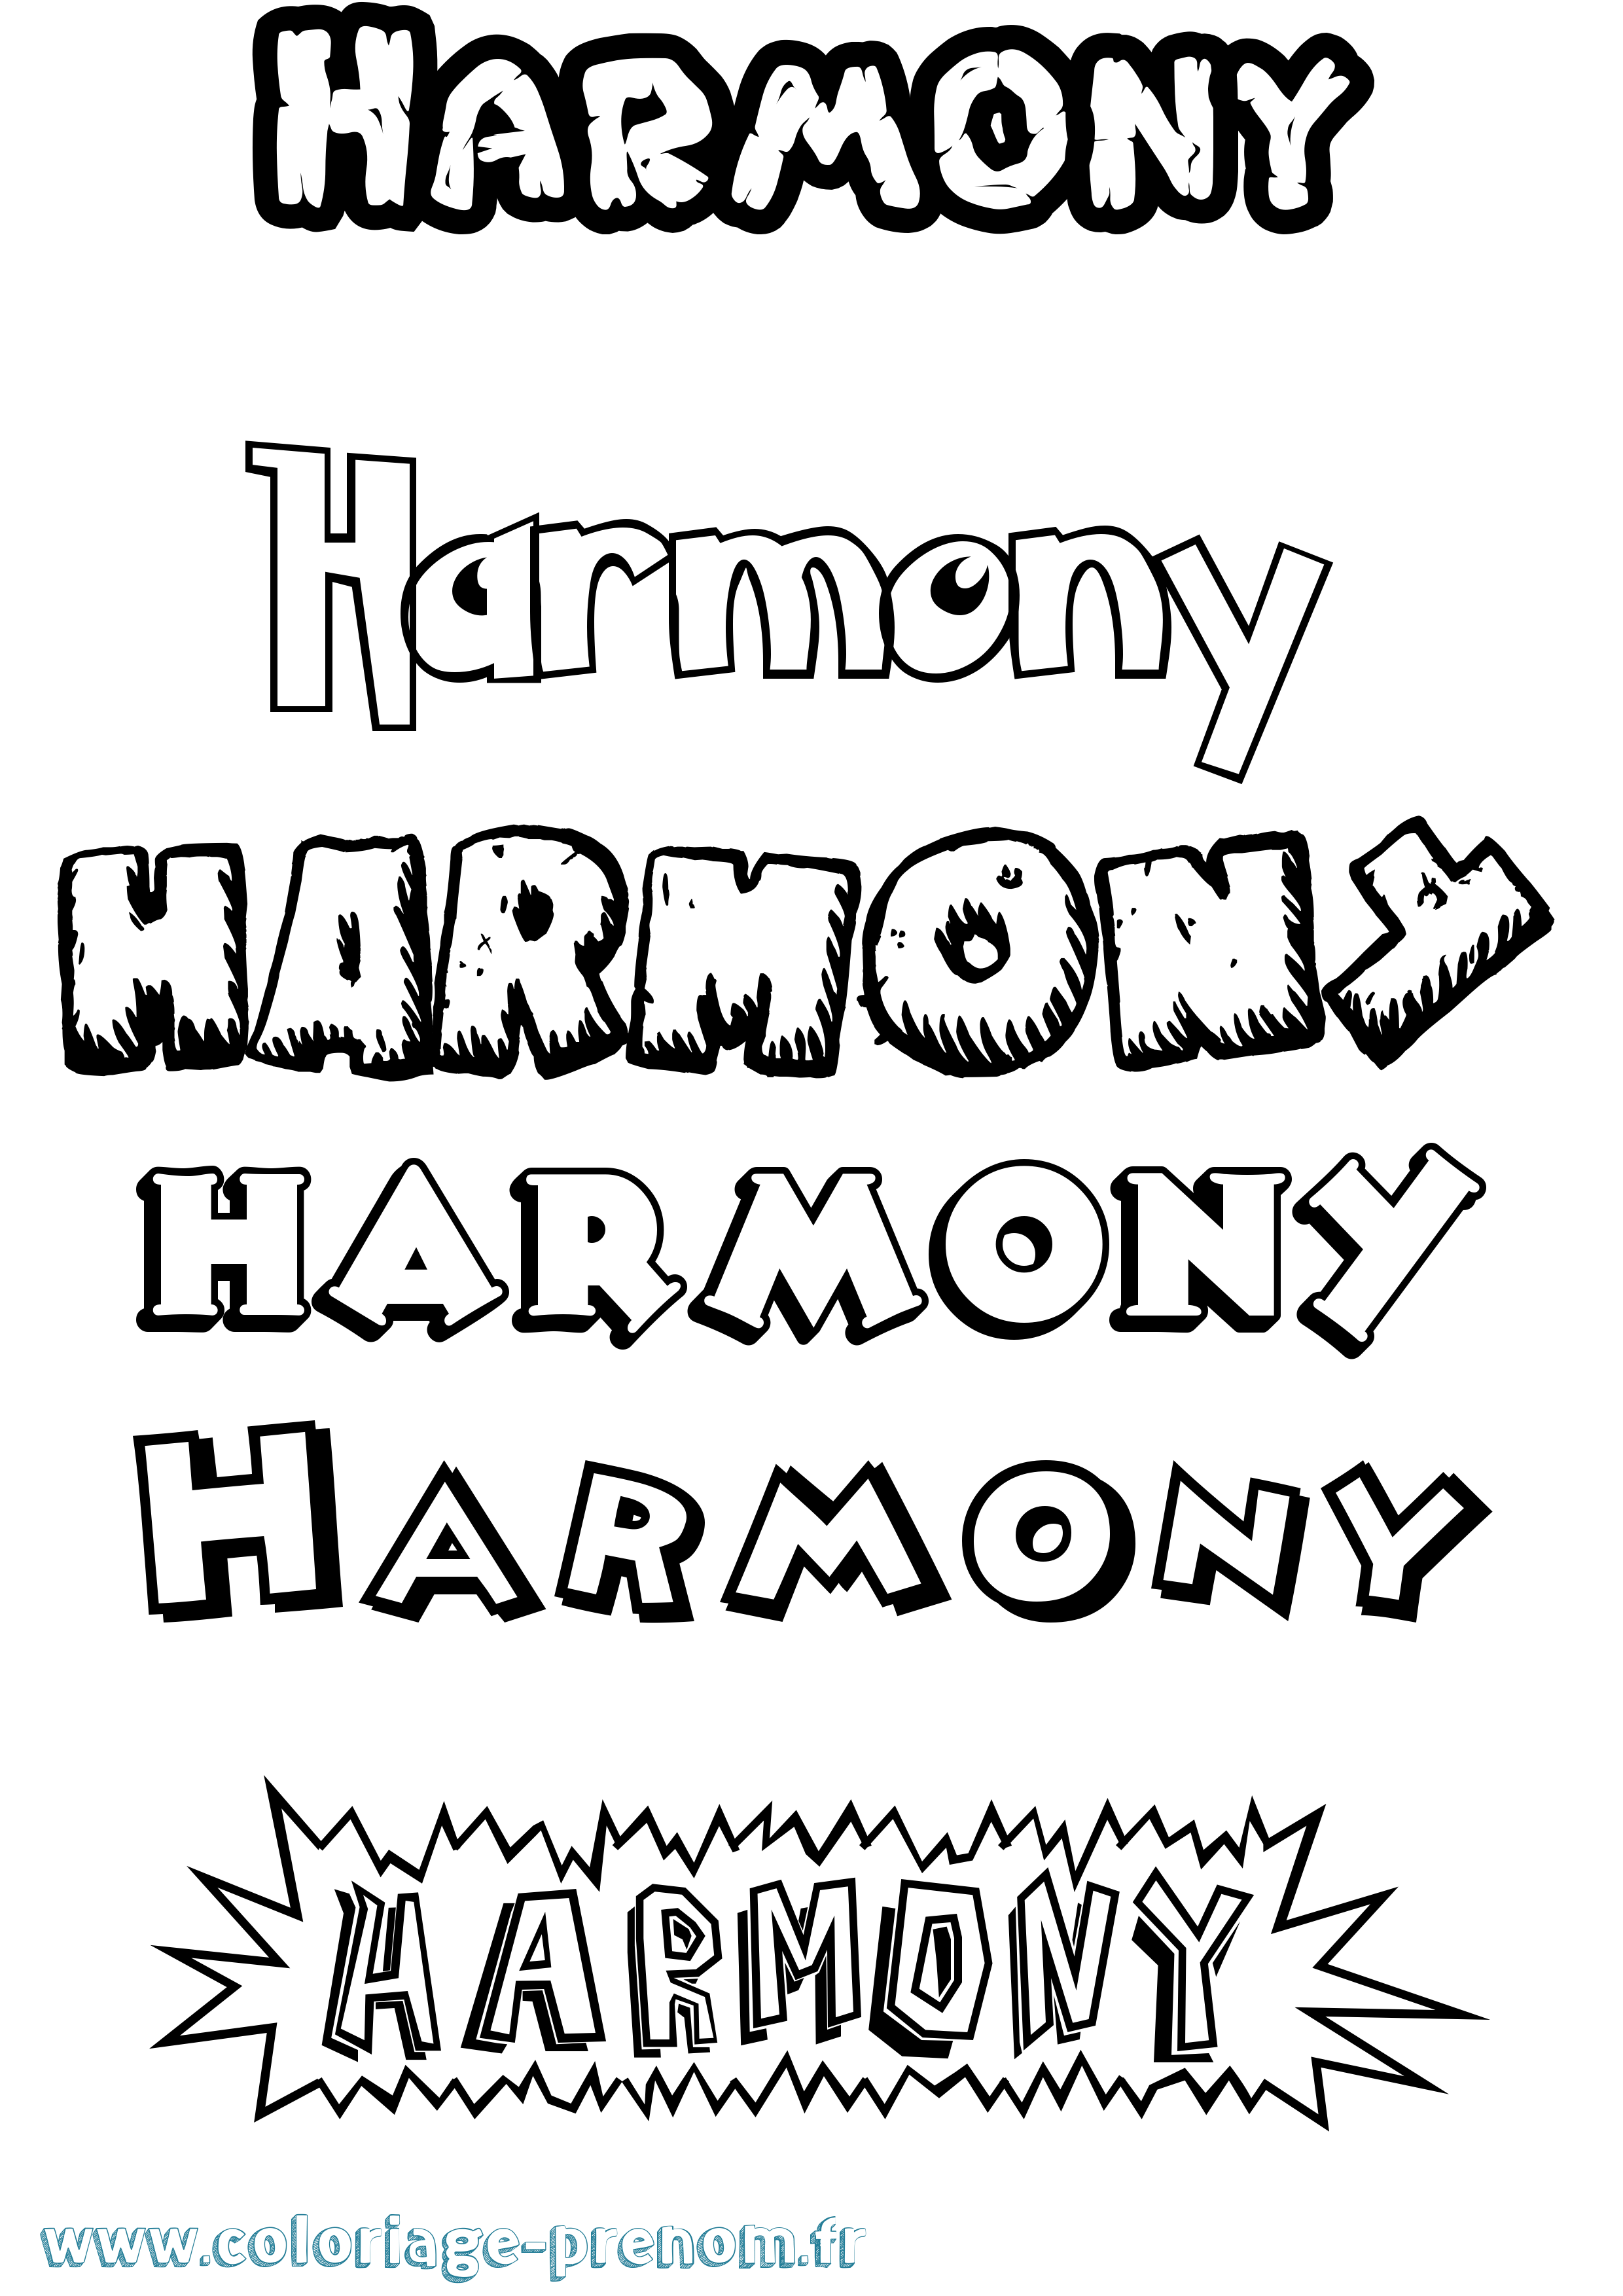 harmony anime pdf download